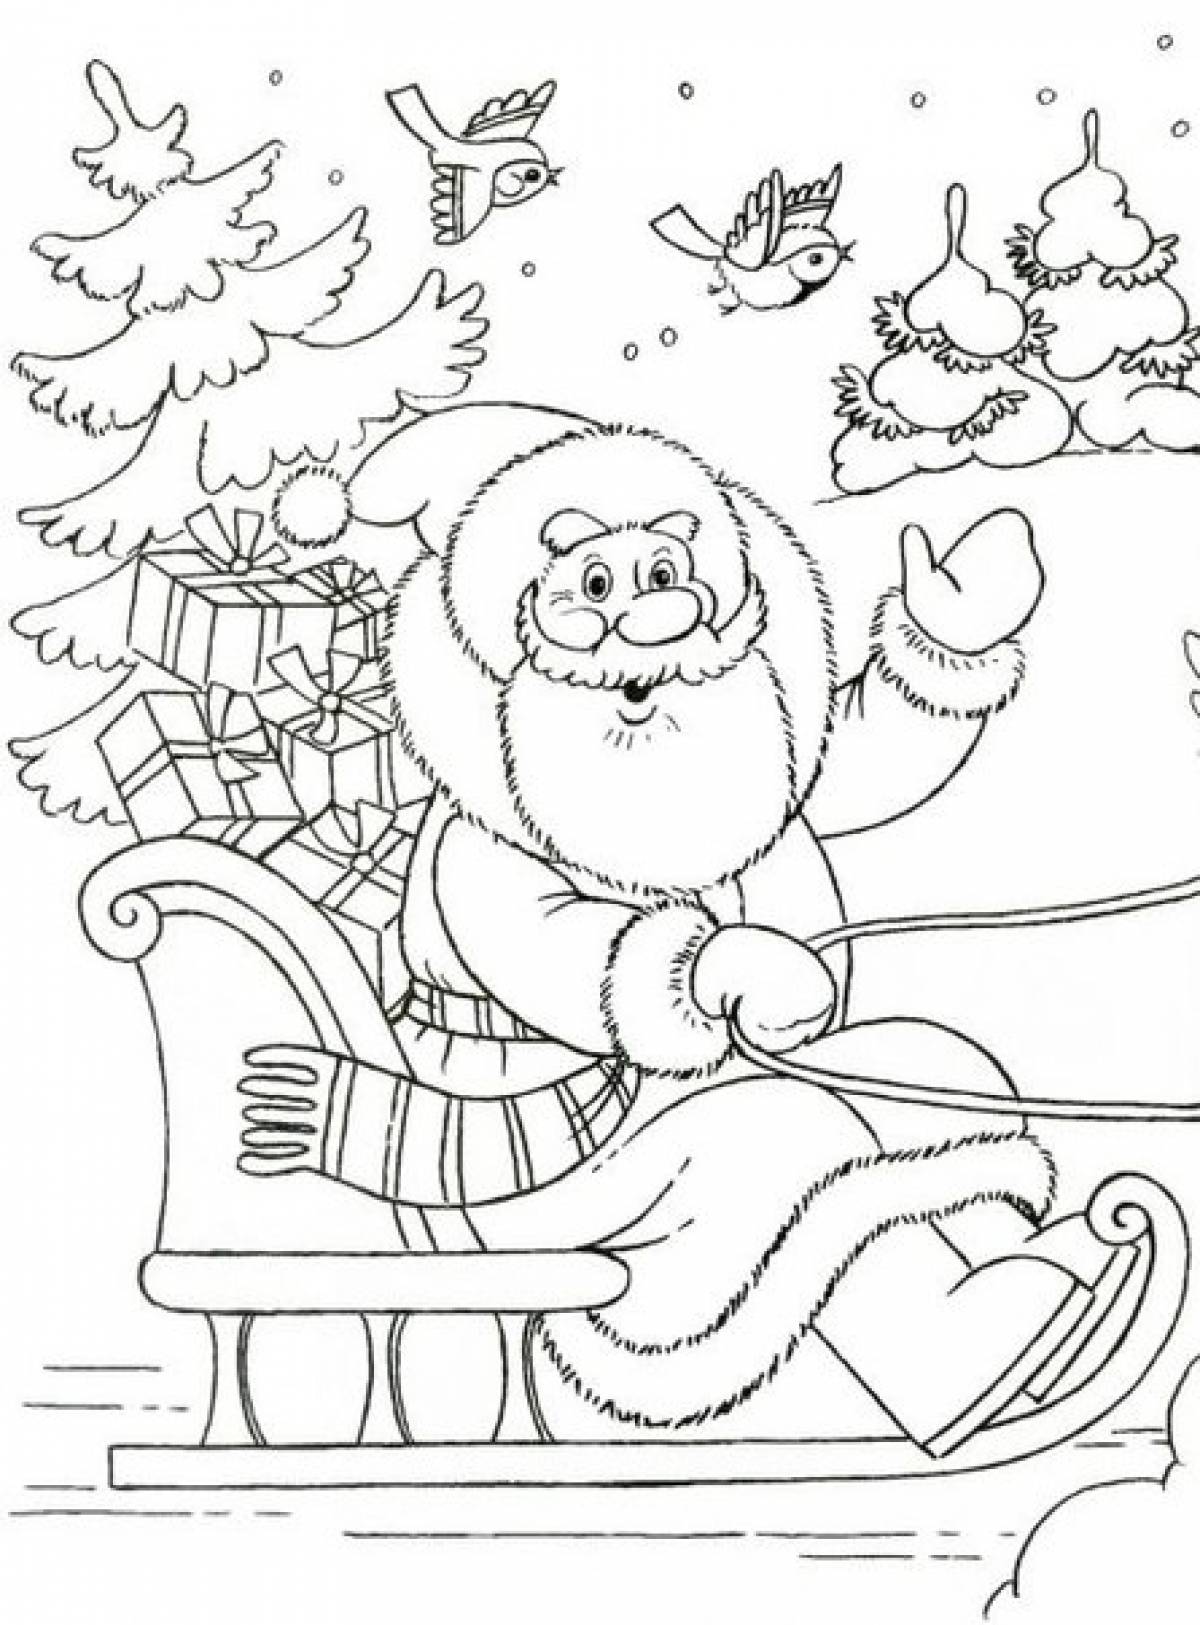 Santa Claus hurries to the holiday